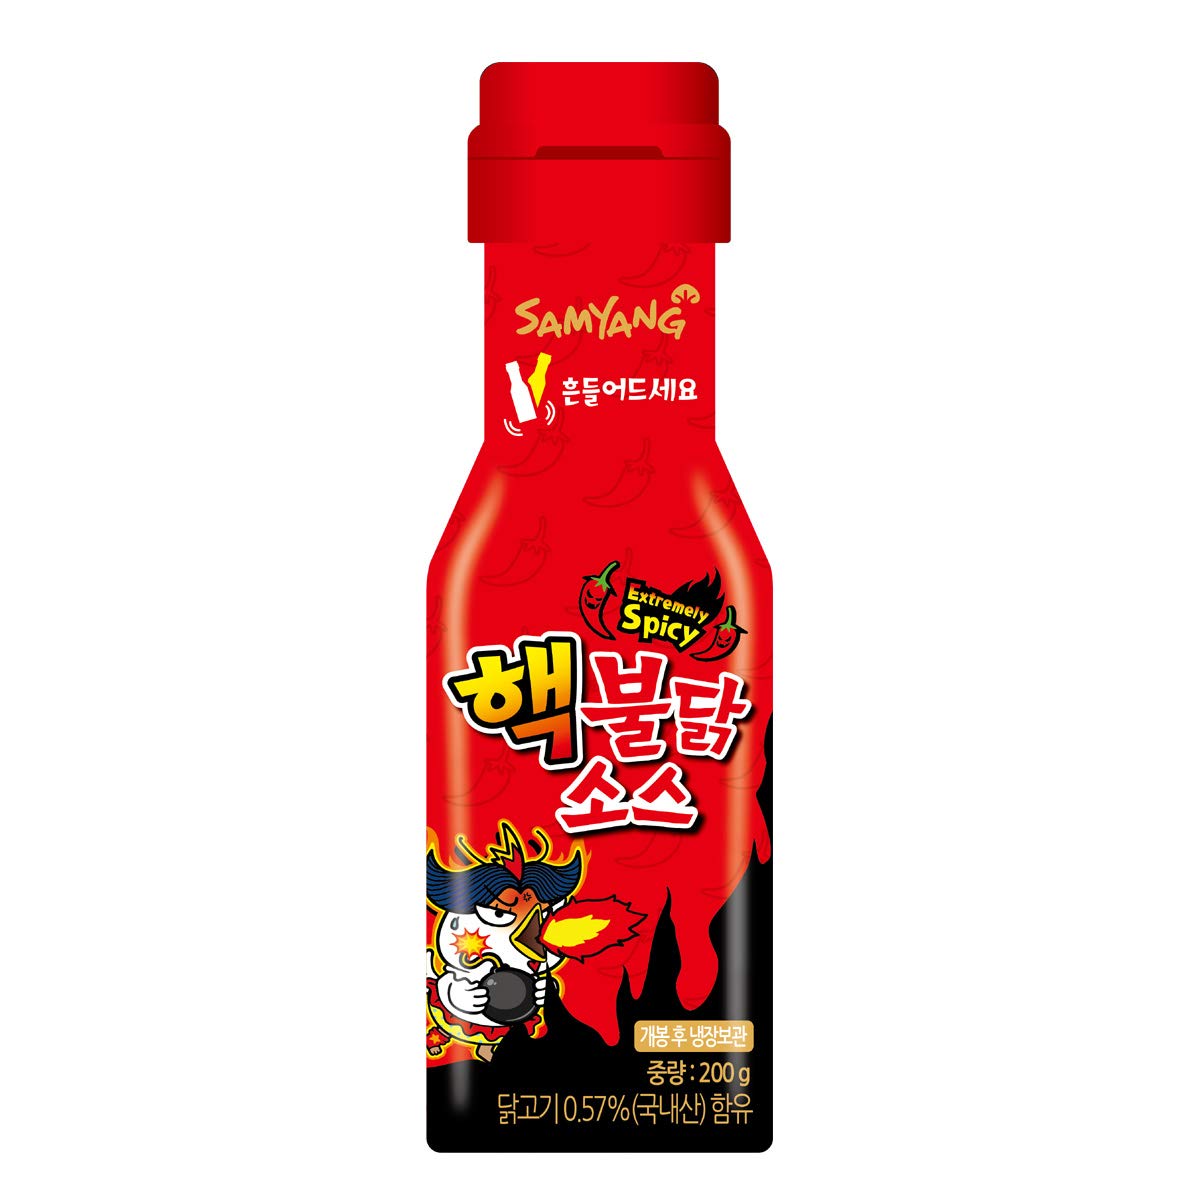 Samyang Buldak Extreme Spicy Sås 200g